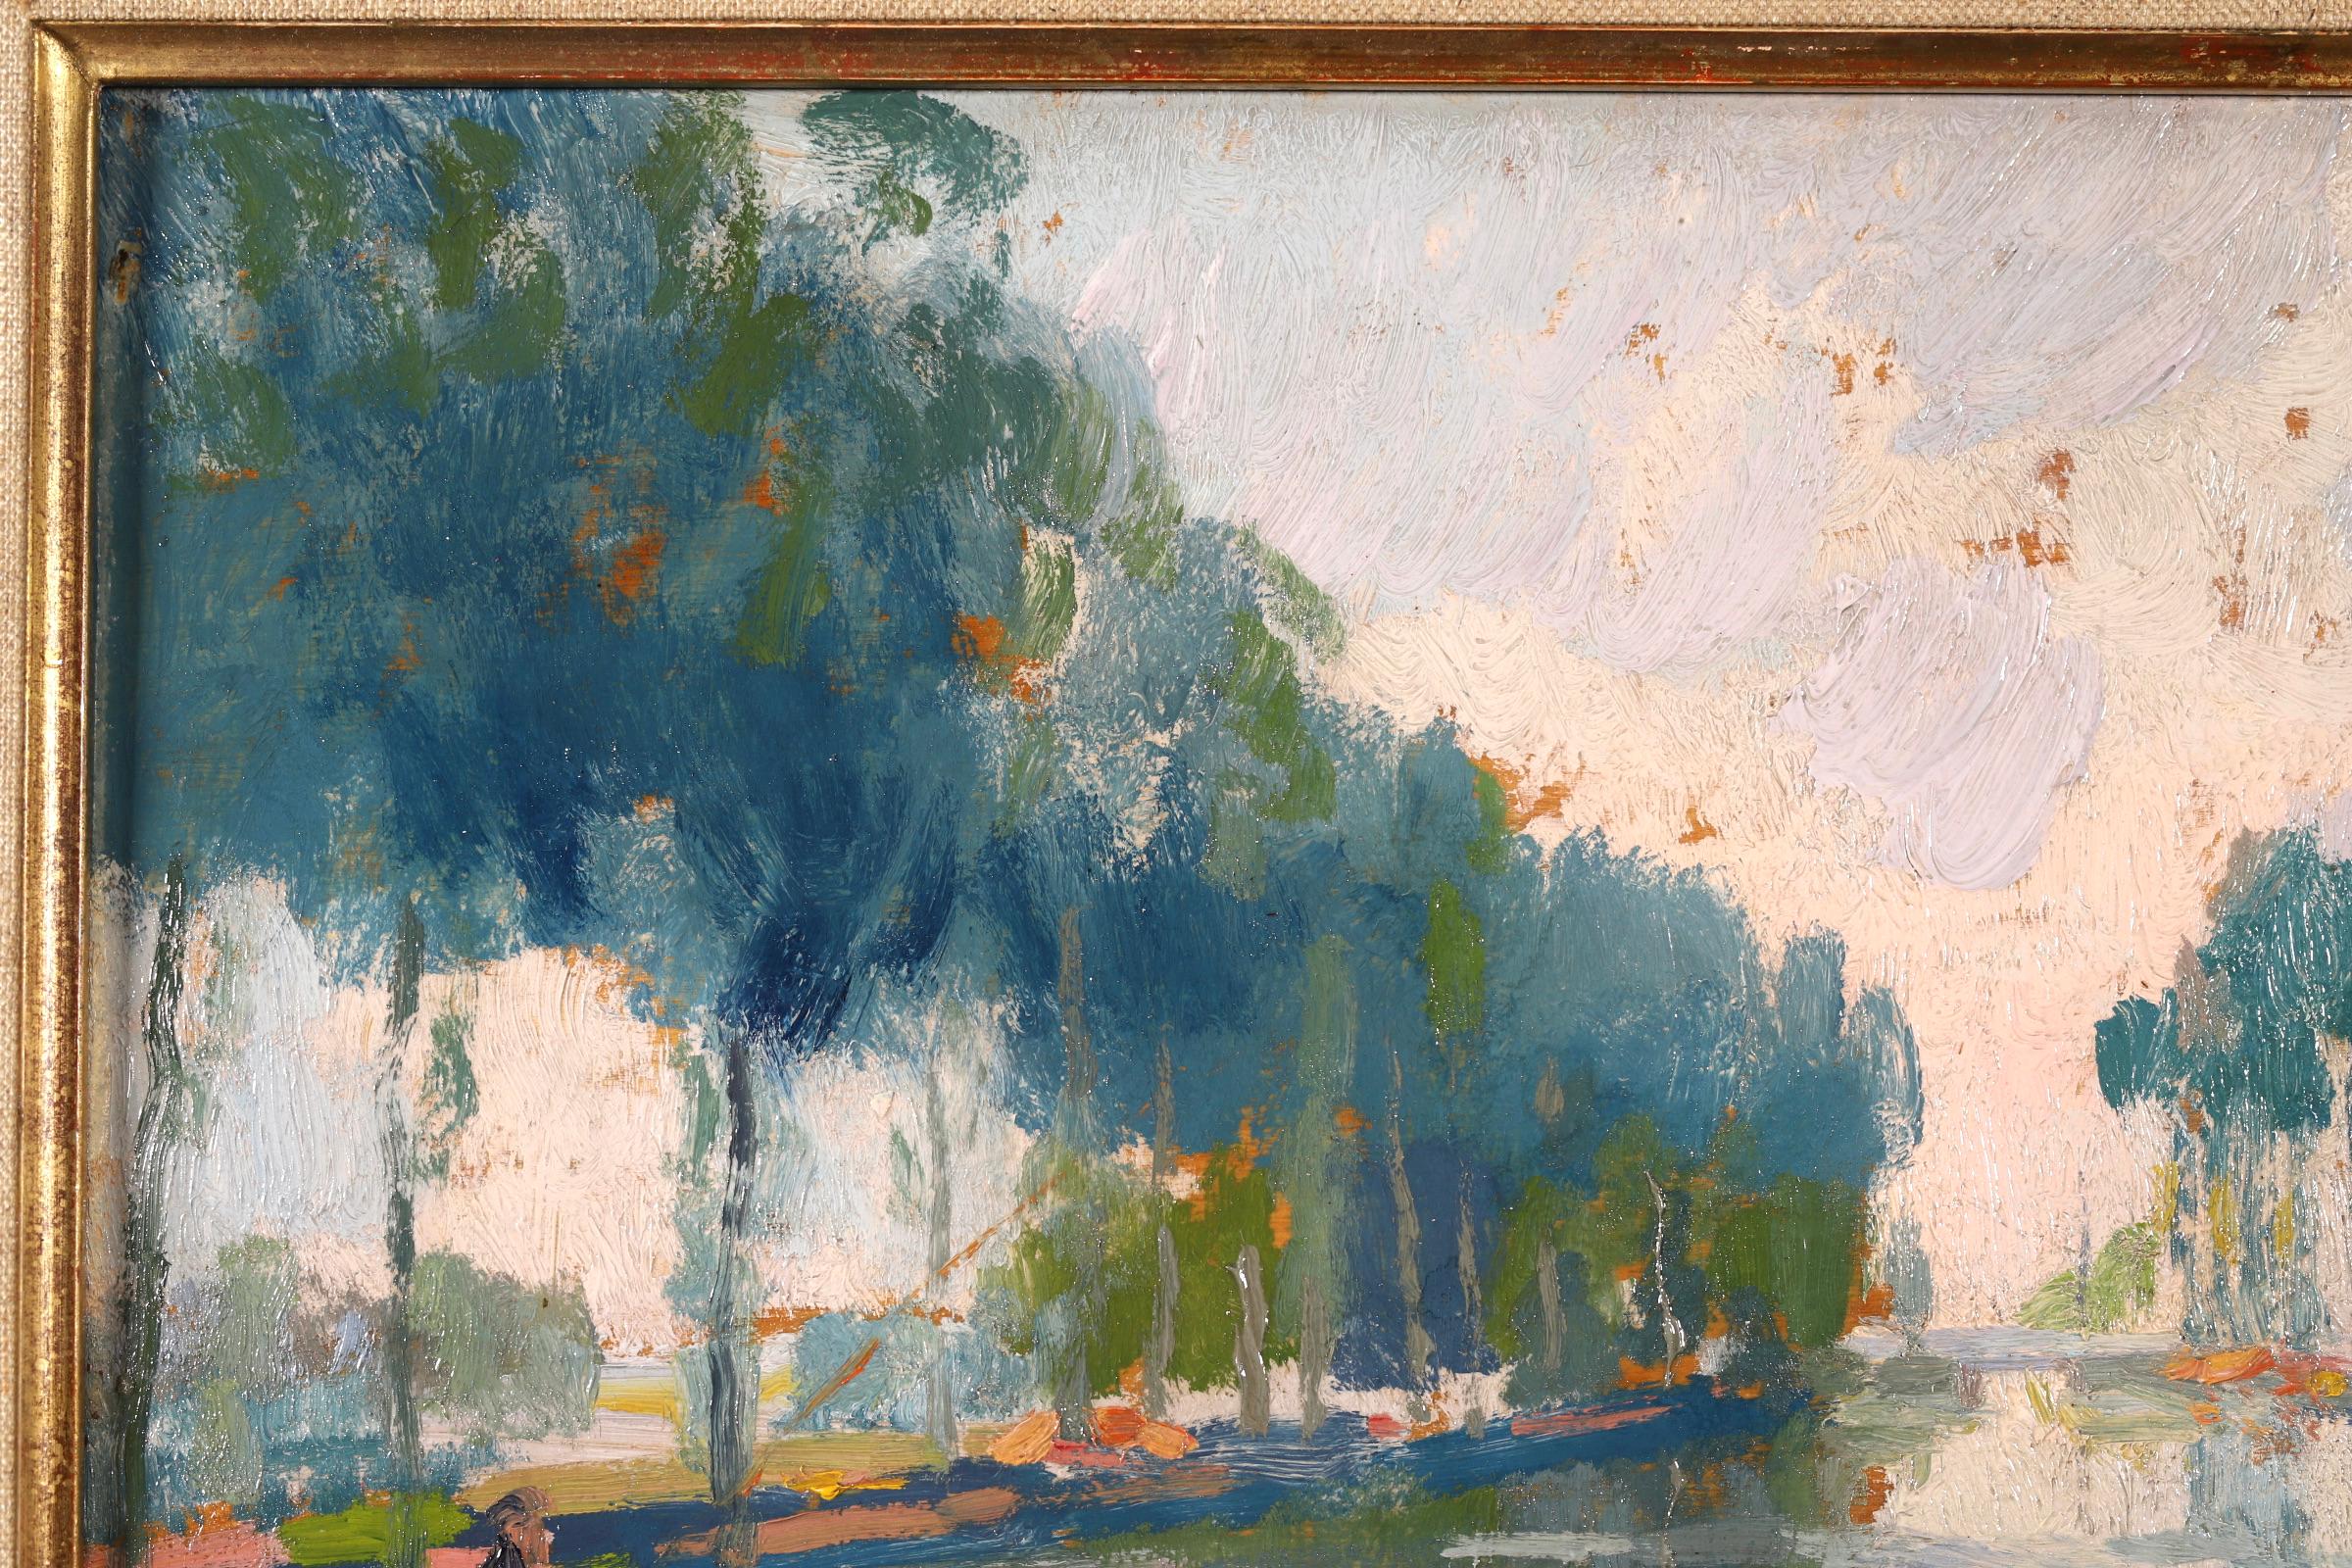  Fishing on the Seine - Post Impressionist Oil, River Landscape by Elie A Pavil 1